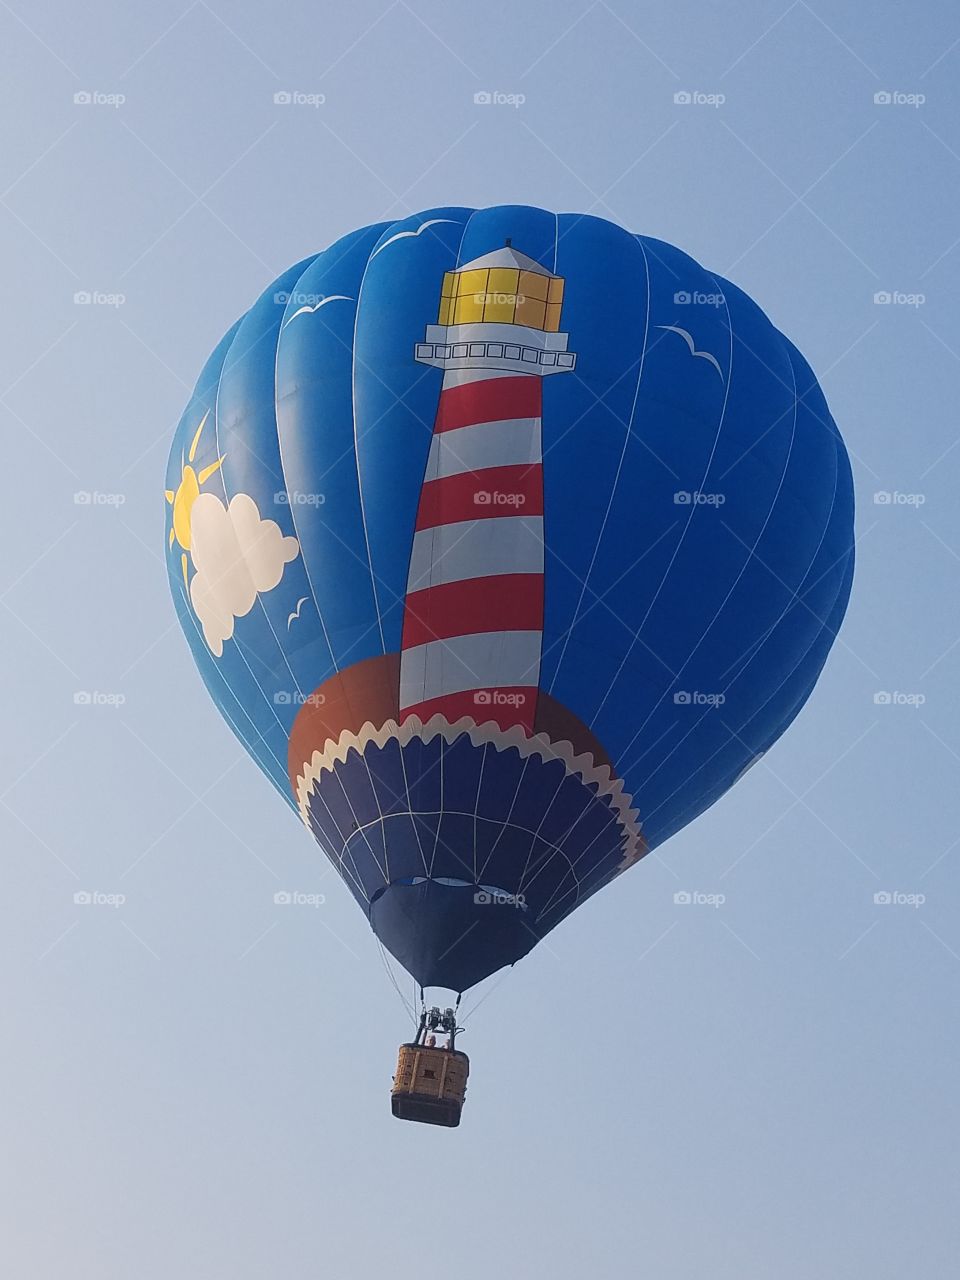 lighthouse hot air balloon